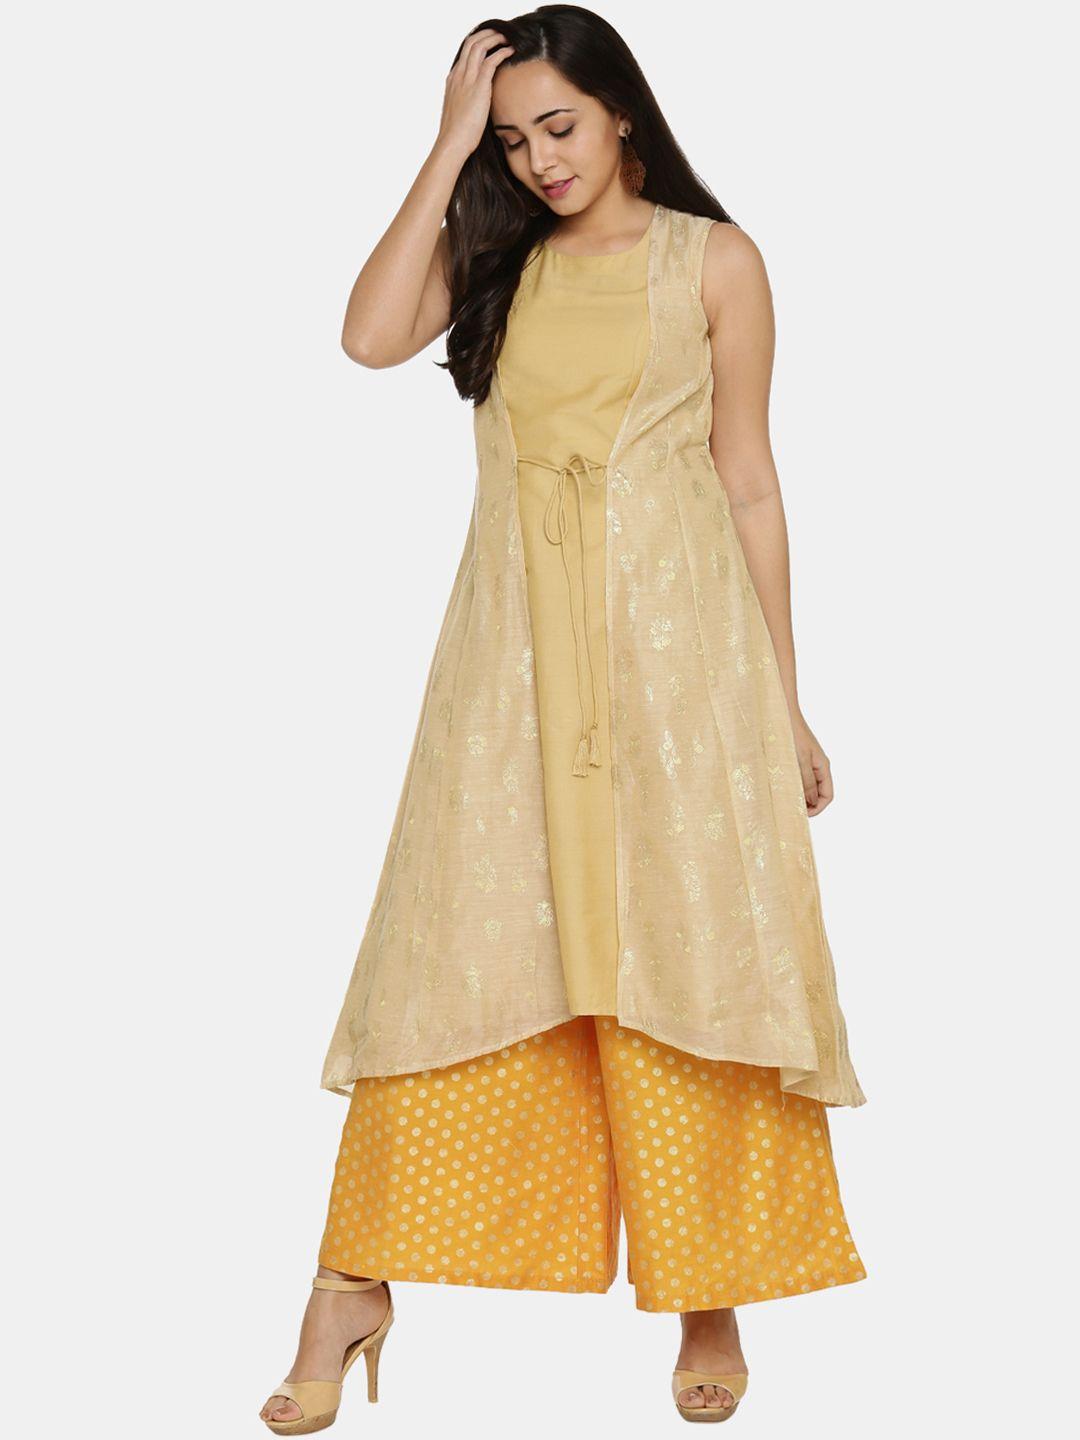 rangmanch by pantaloons women gold-toned printed a-line layered kurta